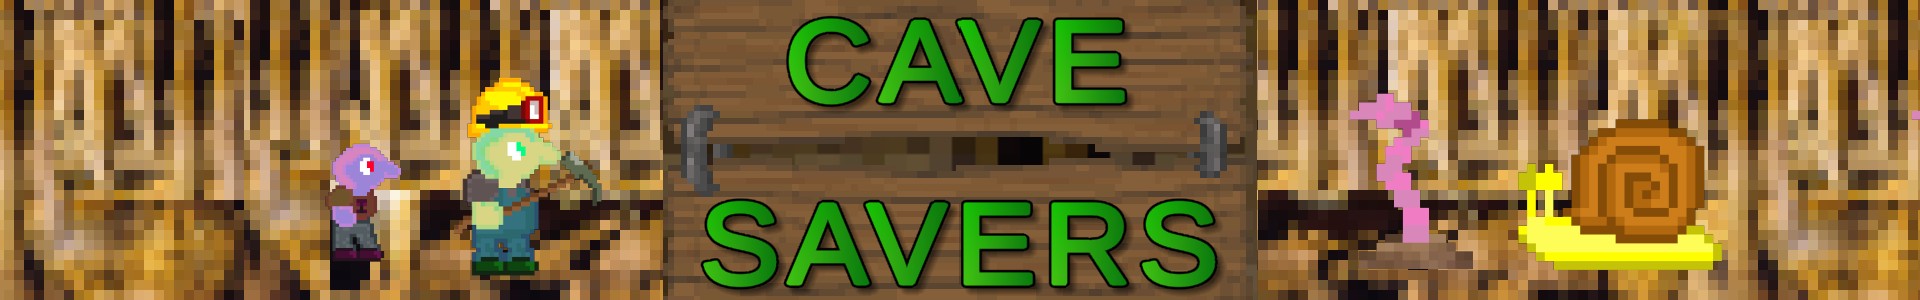 Cave Savers